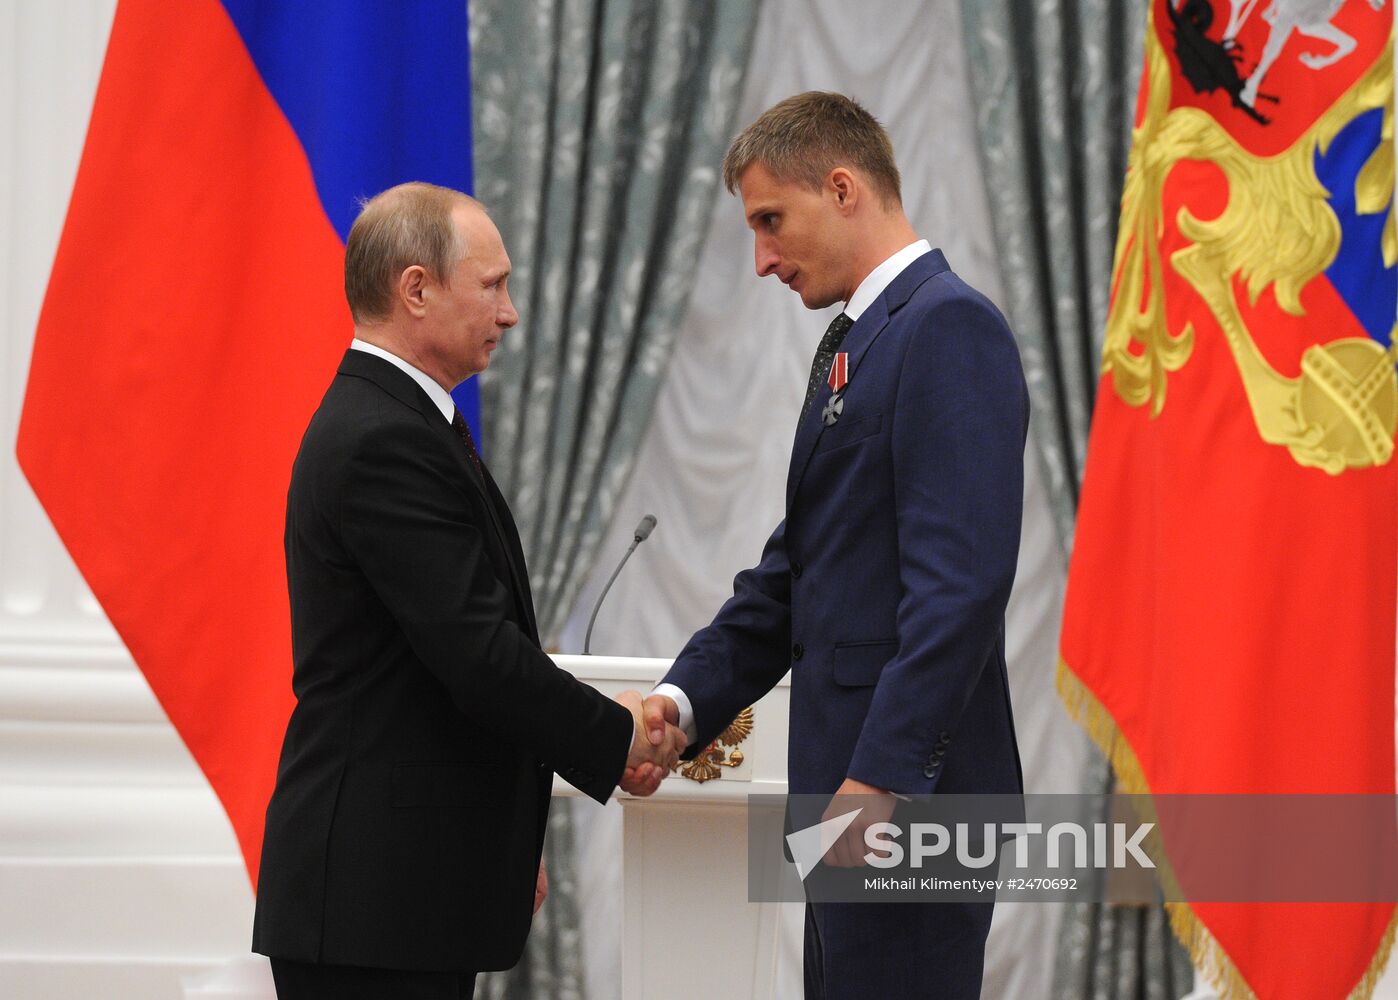 Putin presents government awards in Kremlin